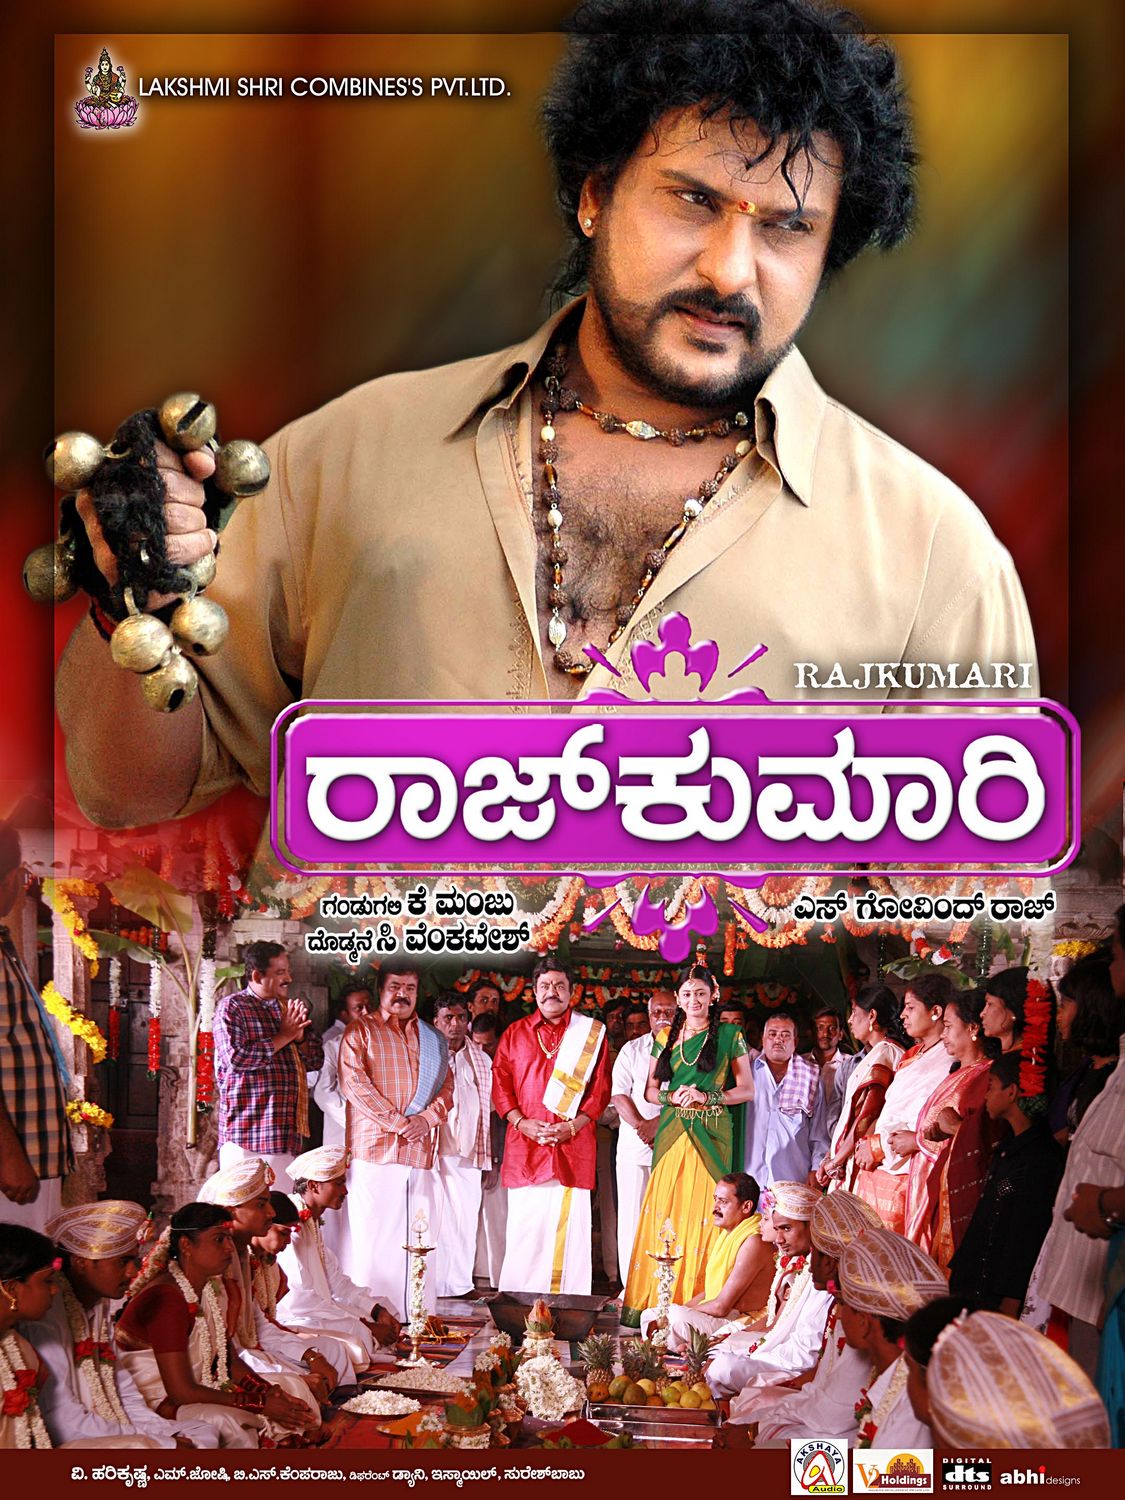 Extra Large Movie Poster Image for Rajkumari (#16 of 20)